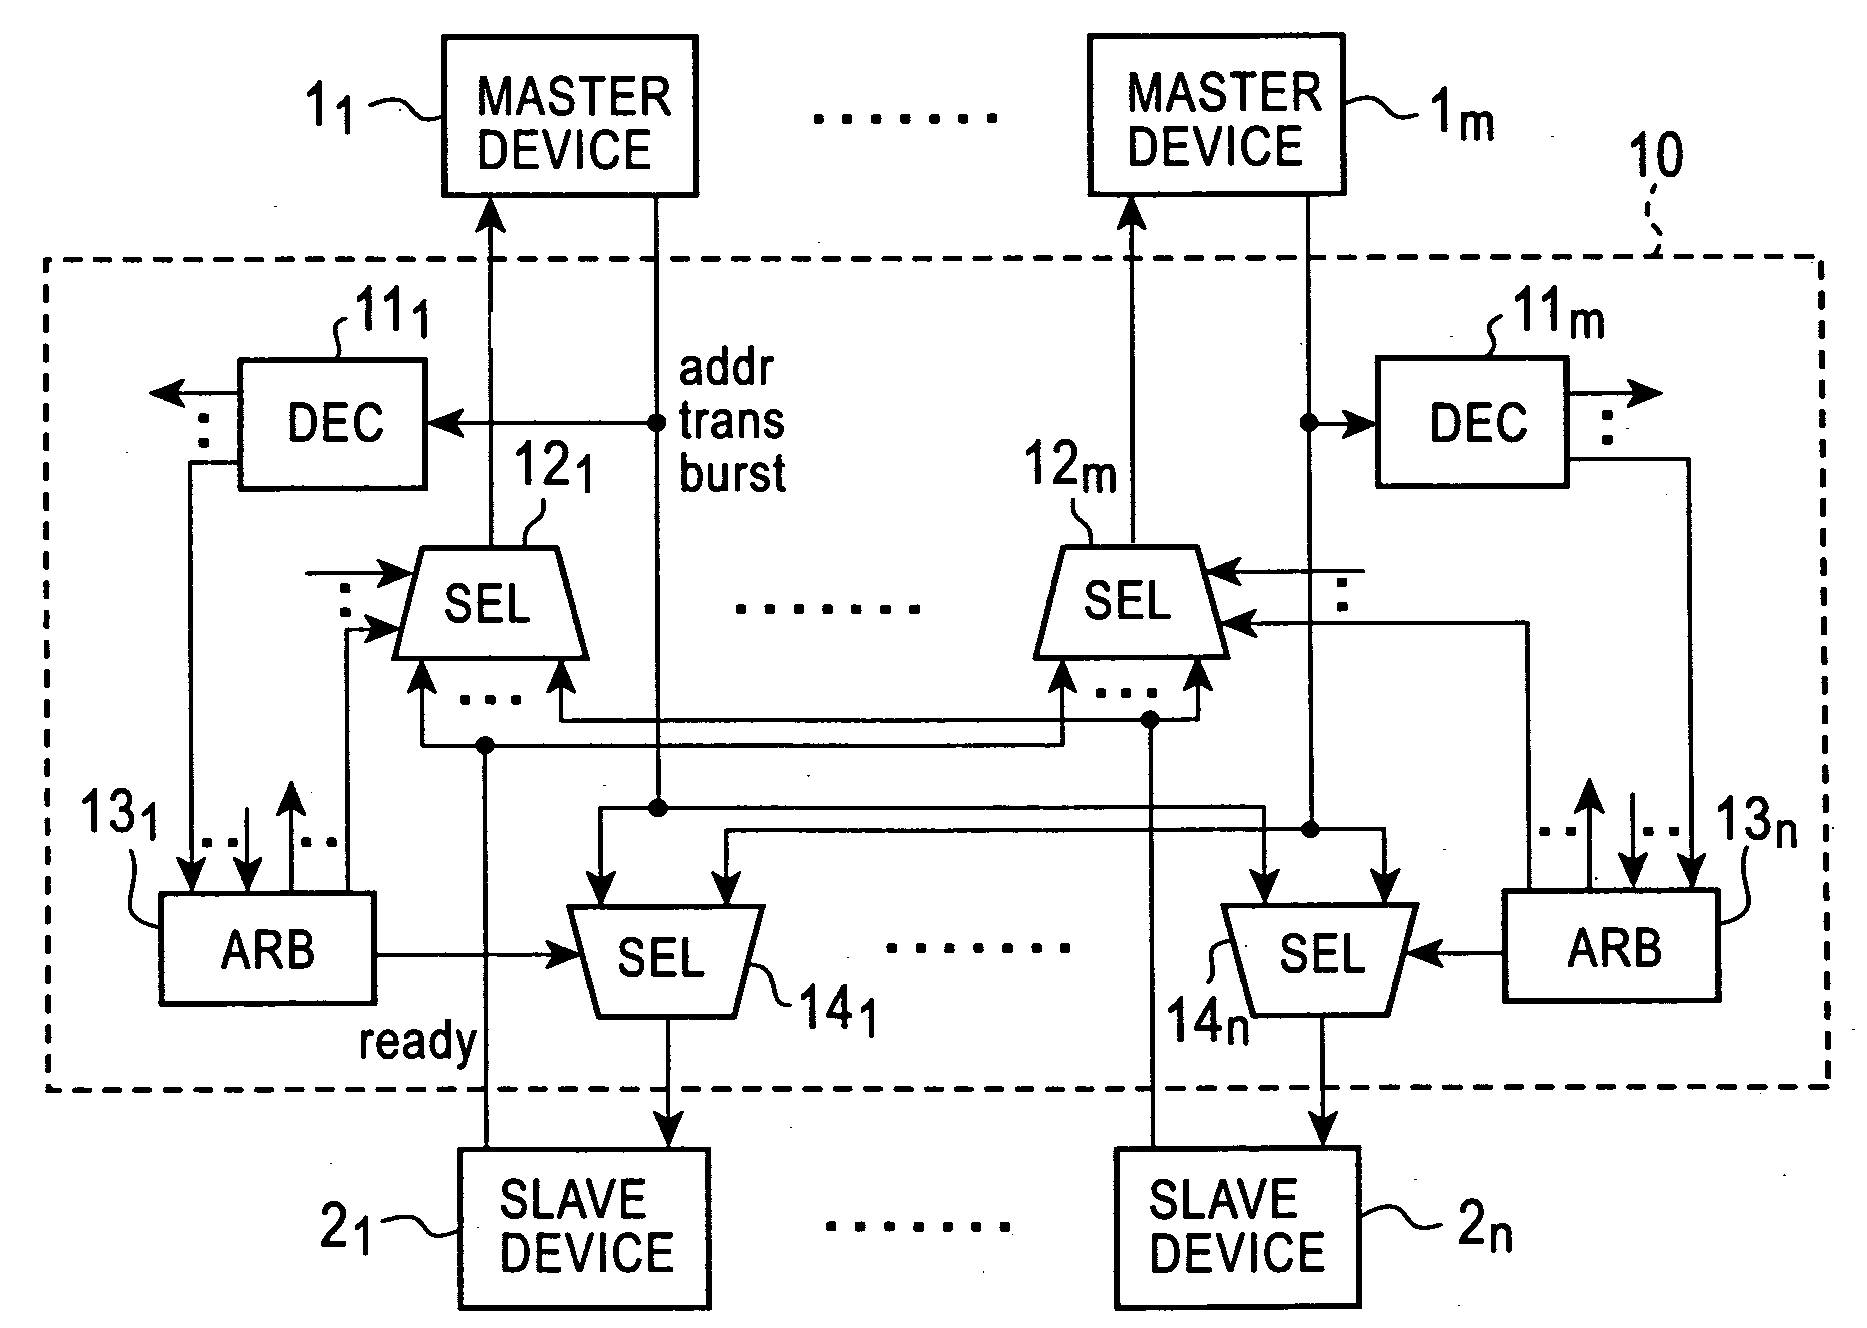 Matrix type bus connection system